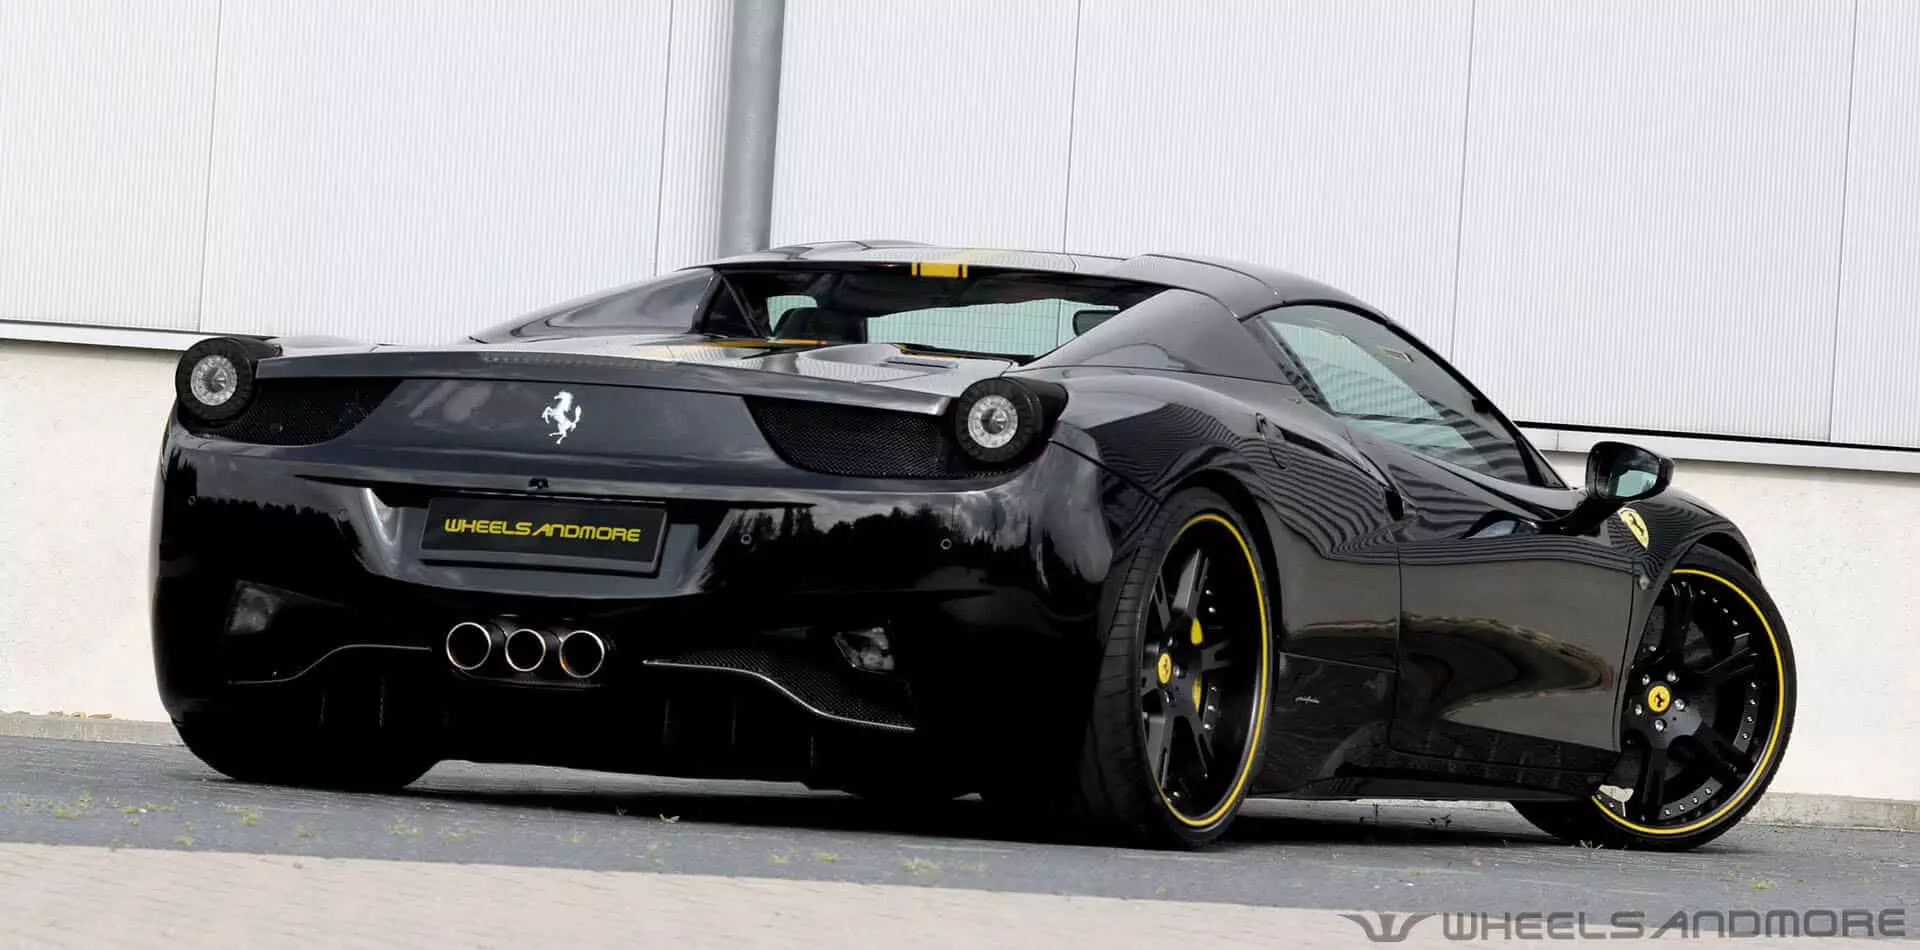 Ferrari 458 black matt